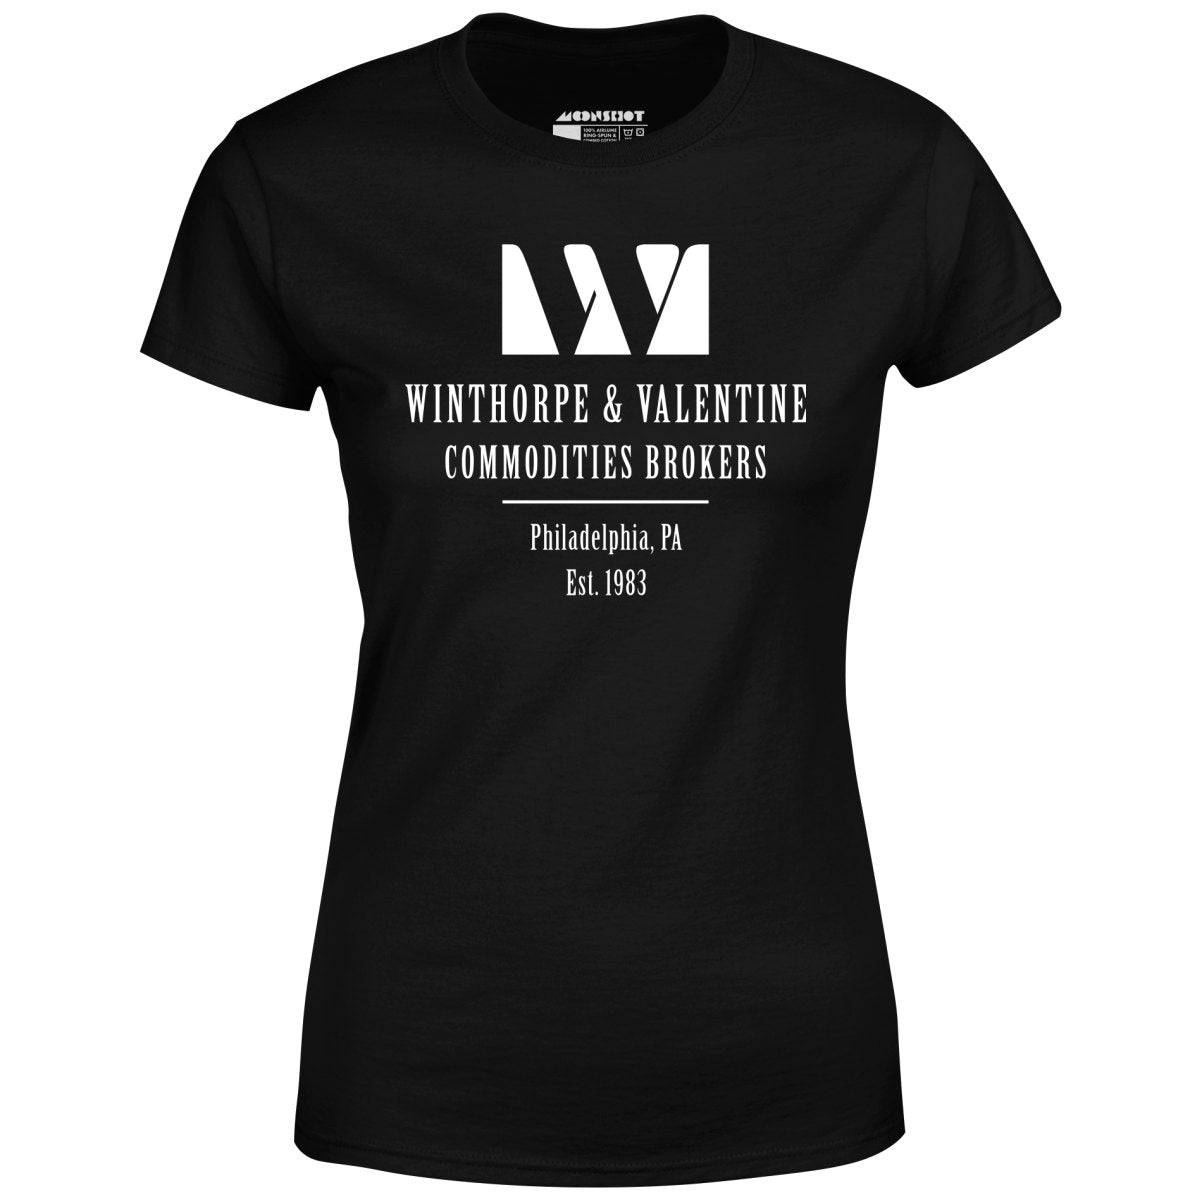 Winthorpe & Valentine Commodities Brokers - Women's T-Shirt